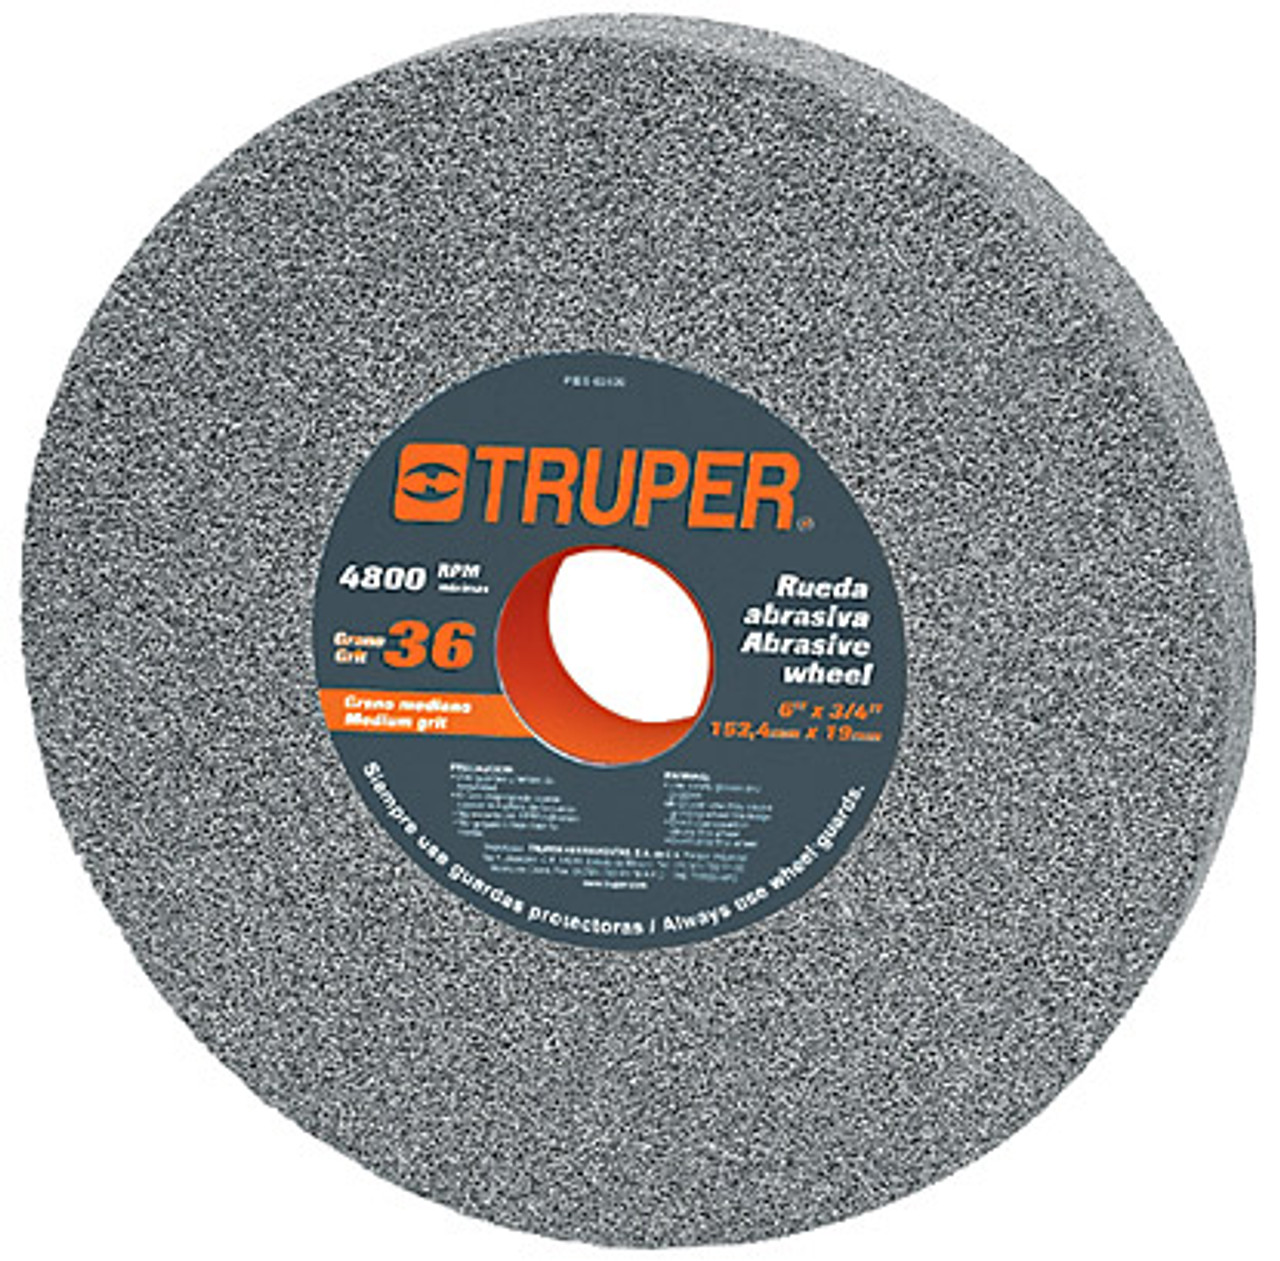 Truper 8x1" Grain 36 Aluminium Grinding Wheel #16411